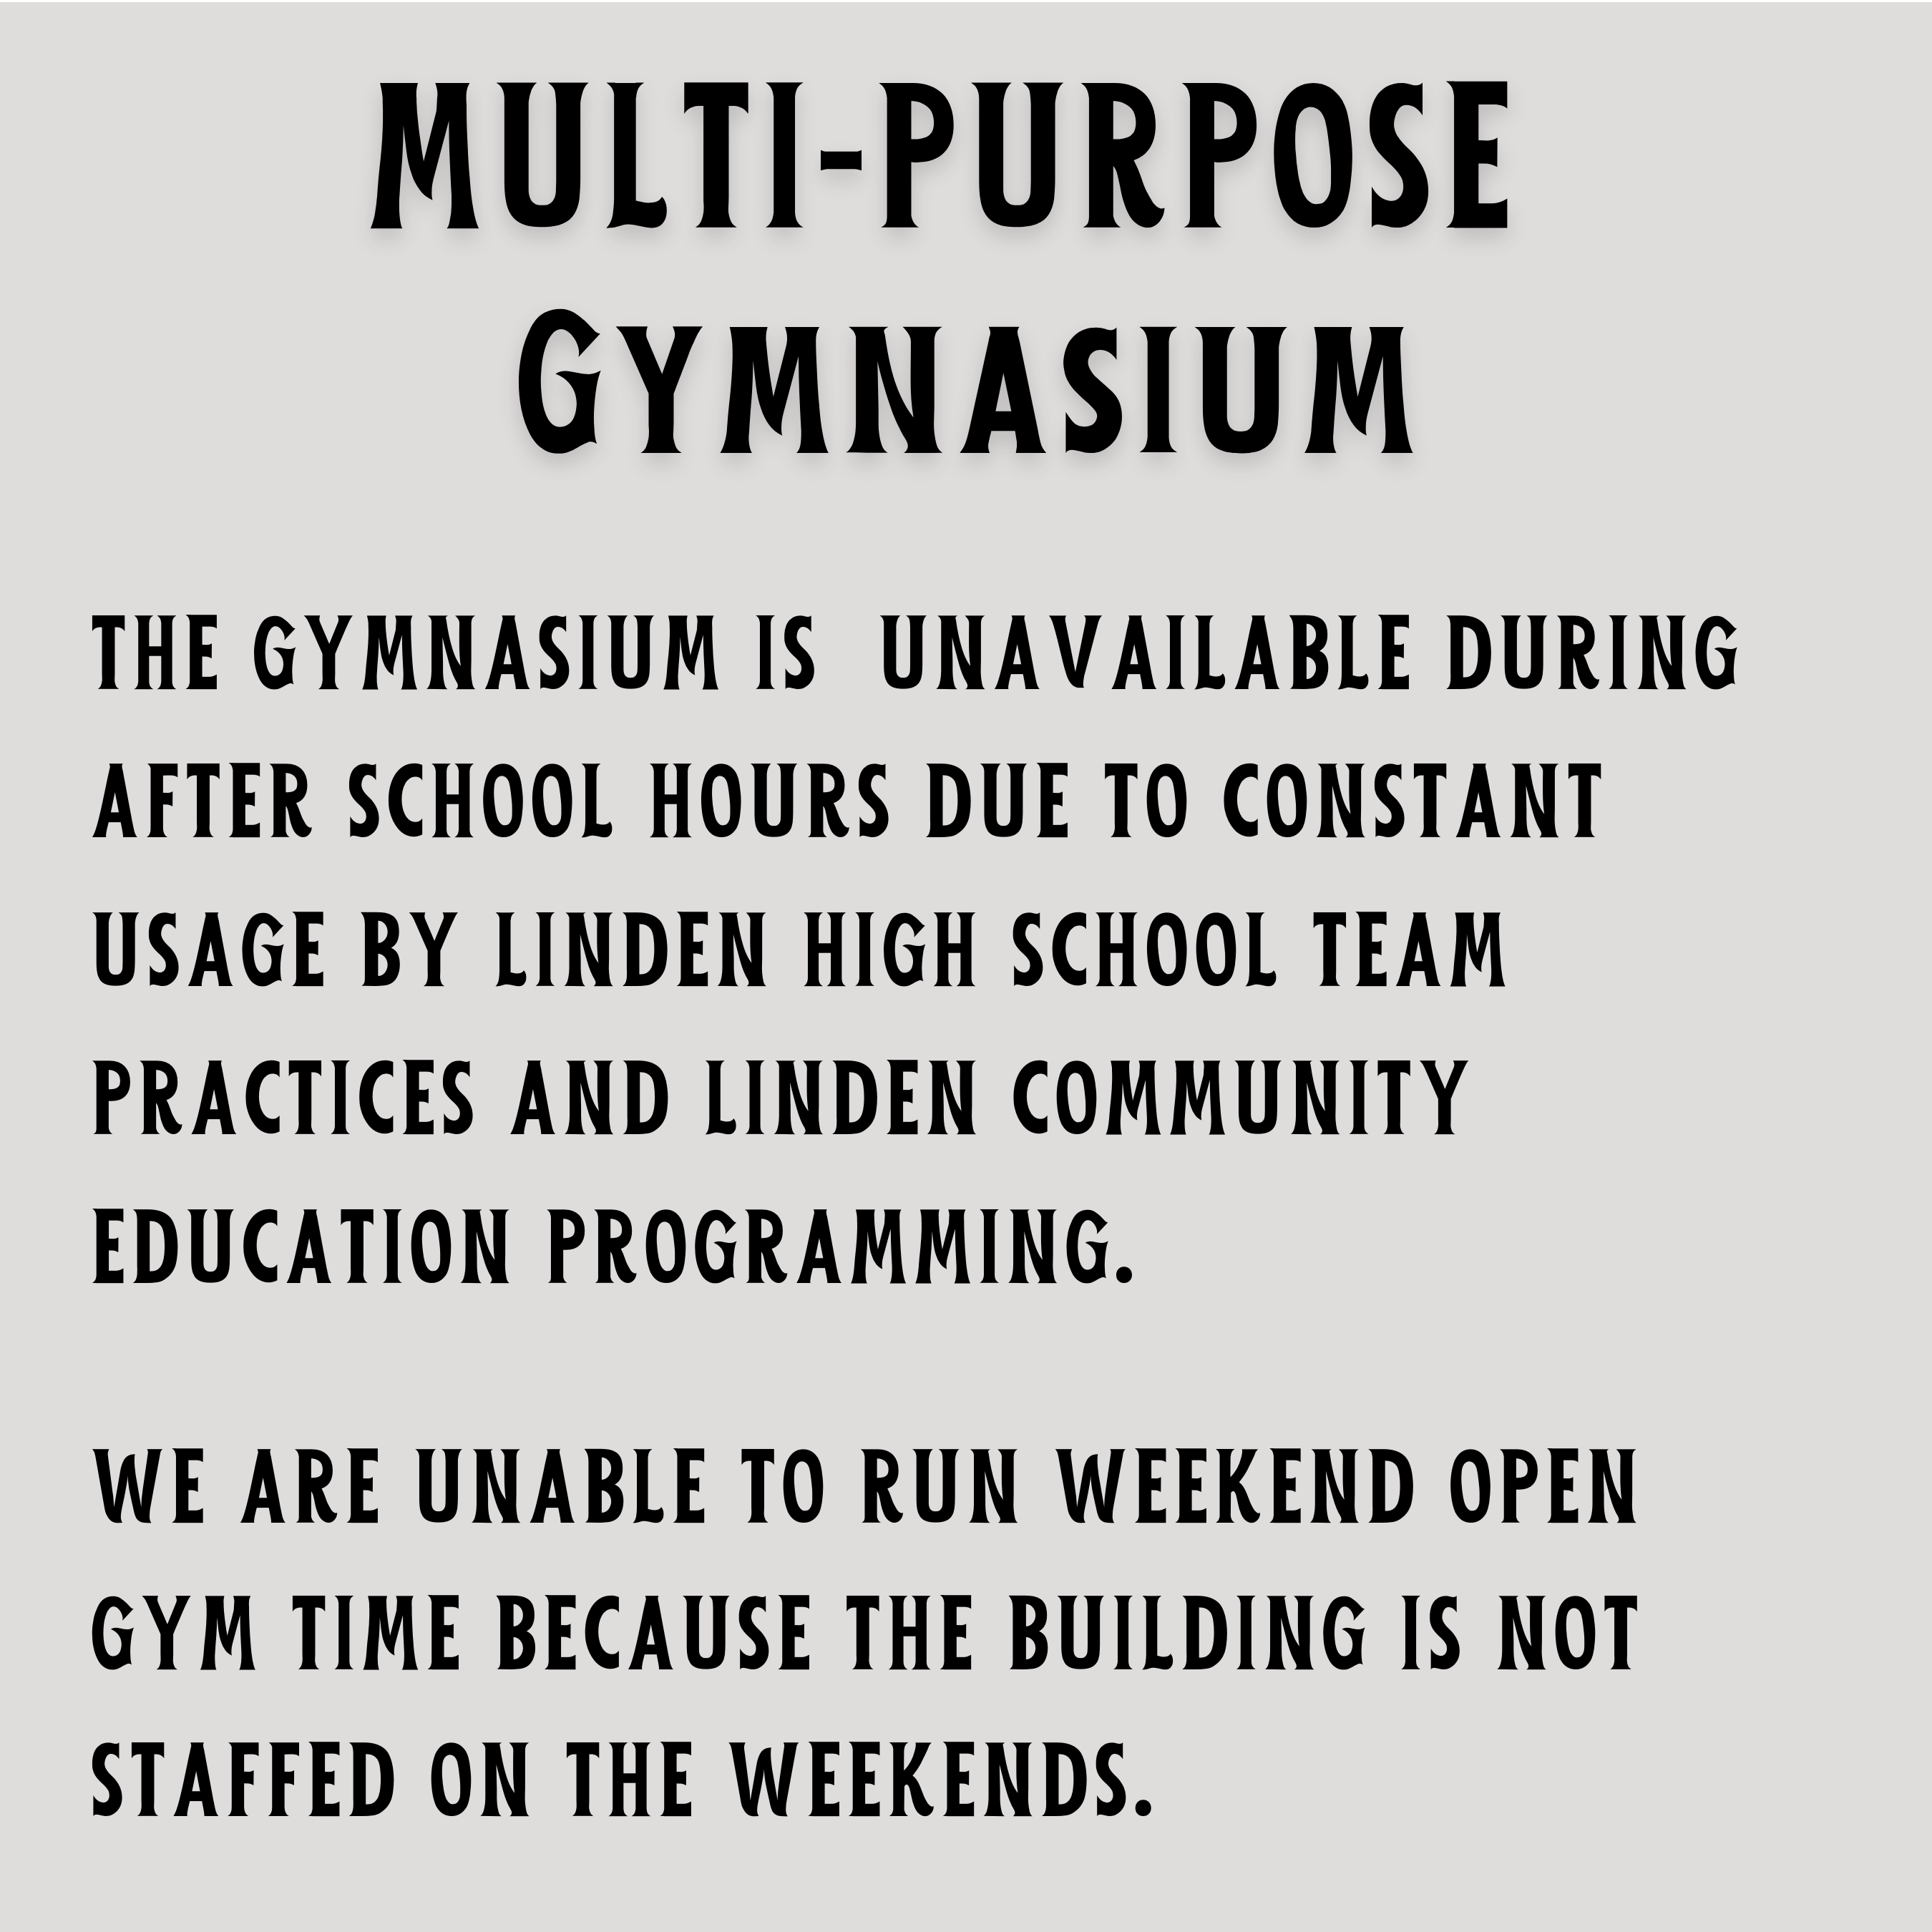 MPB Gym availability